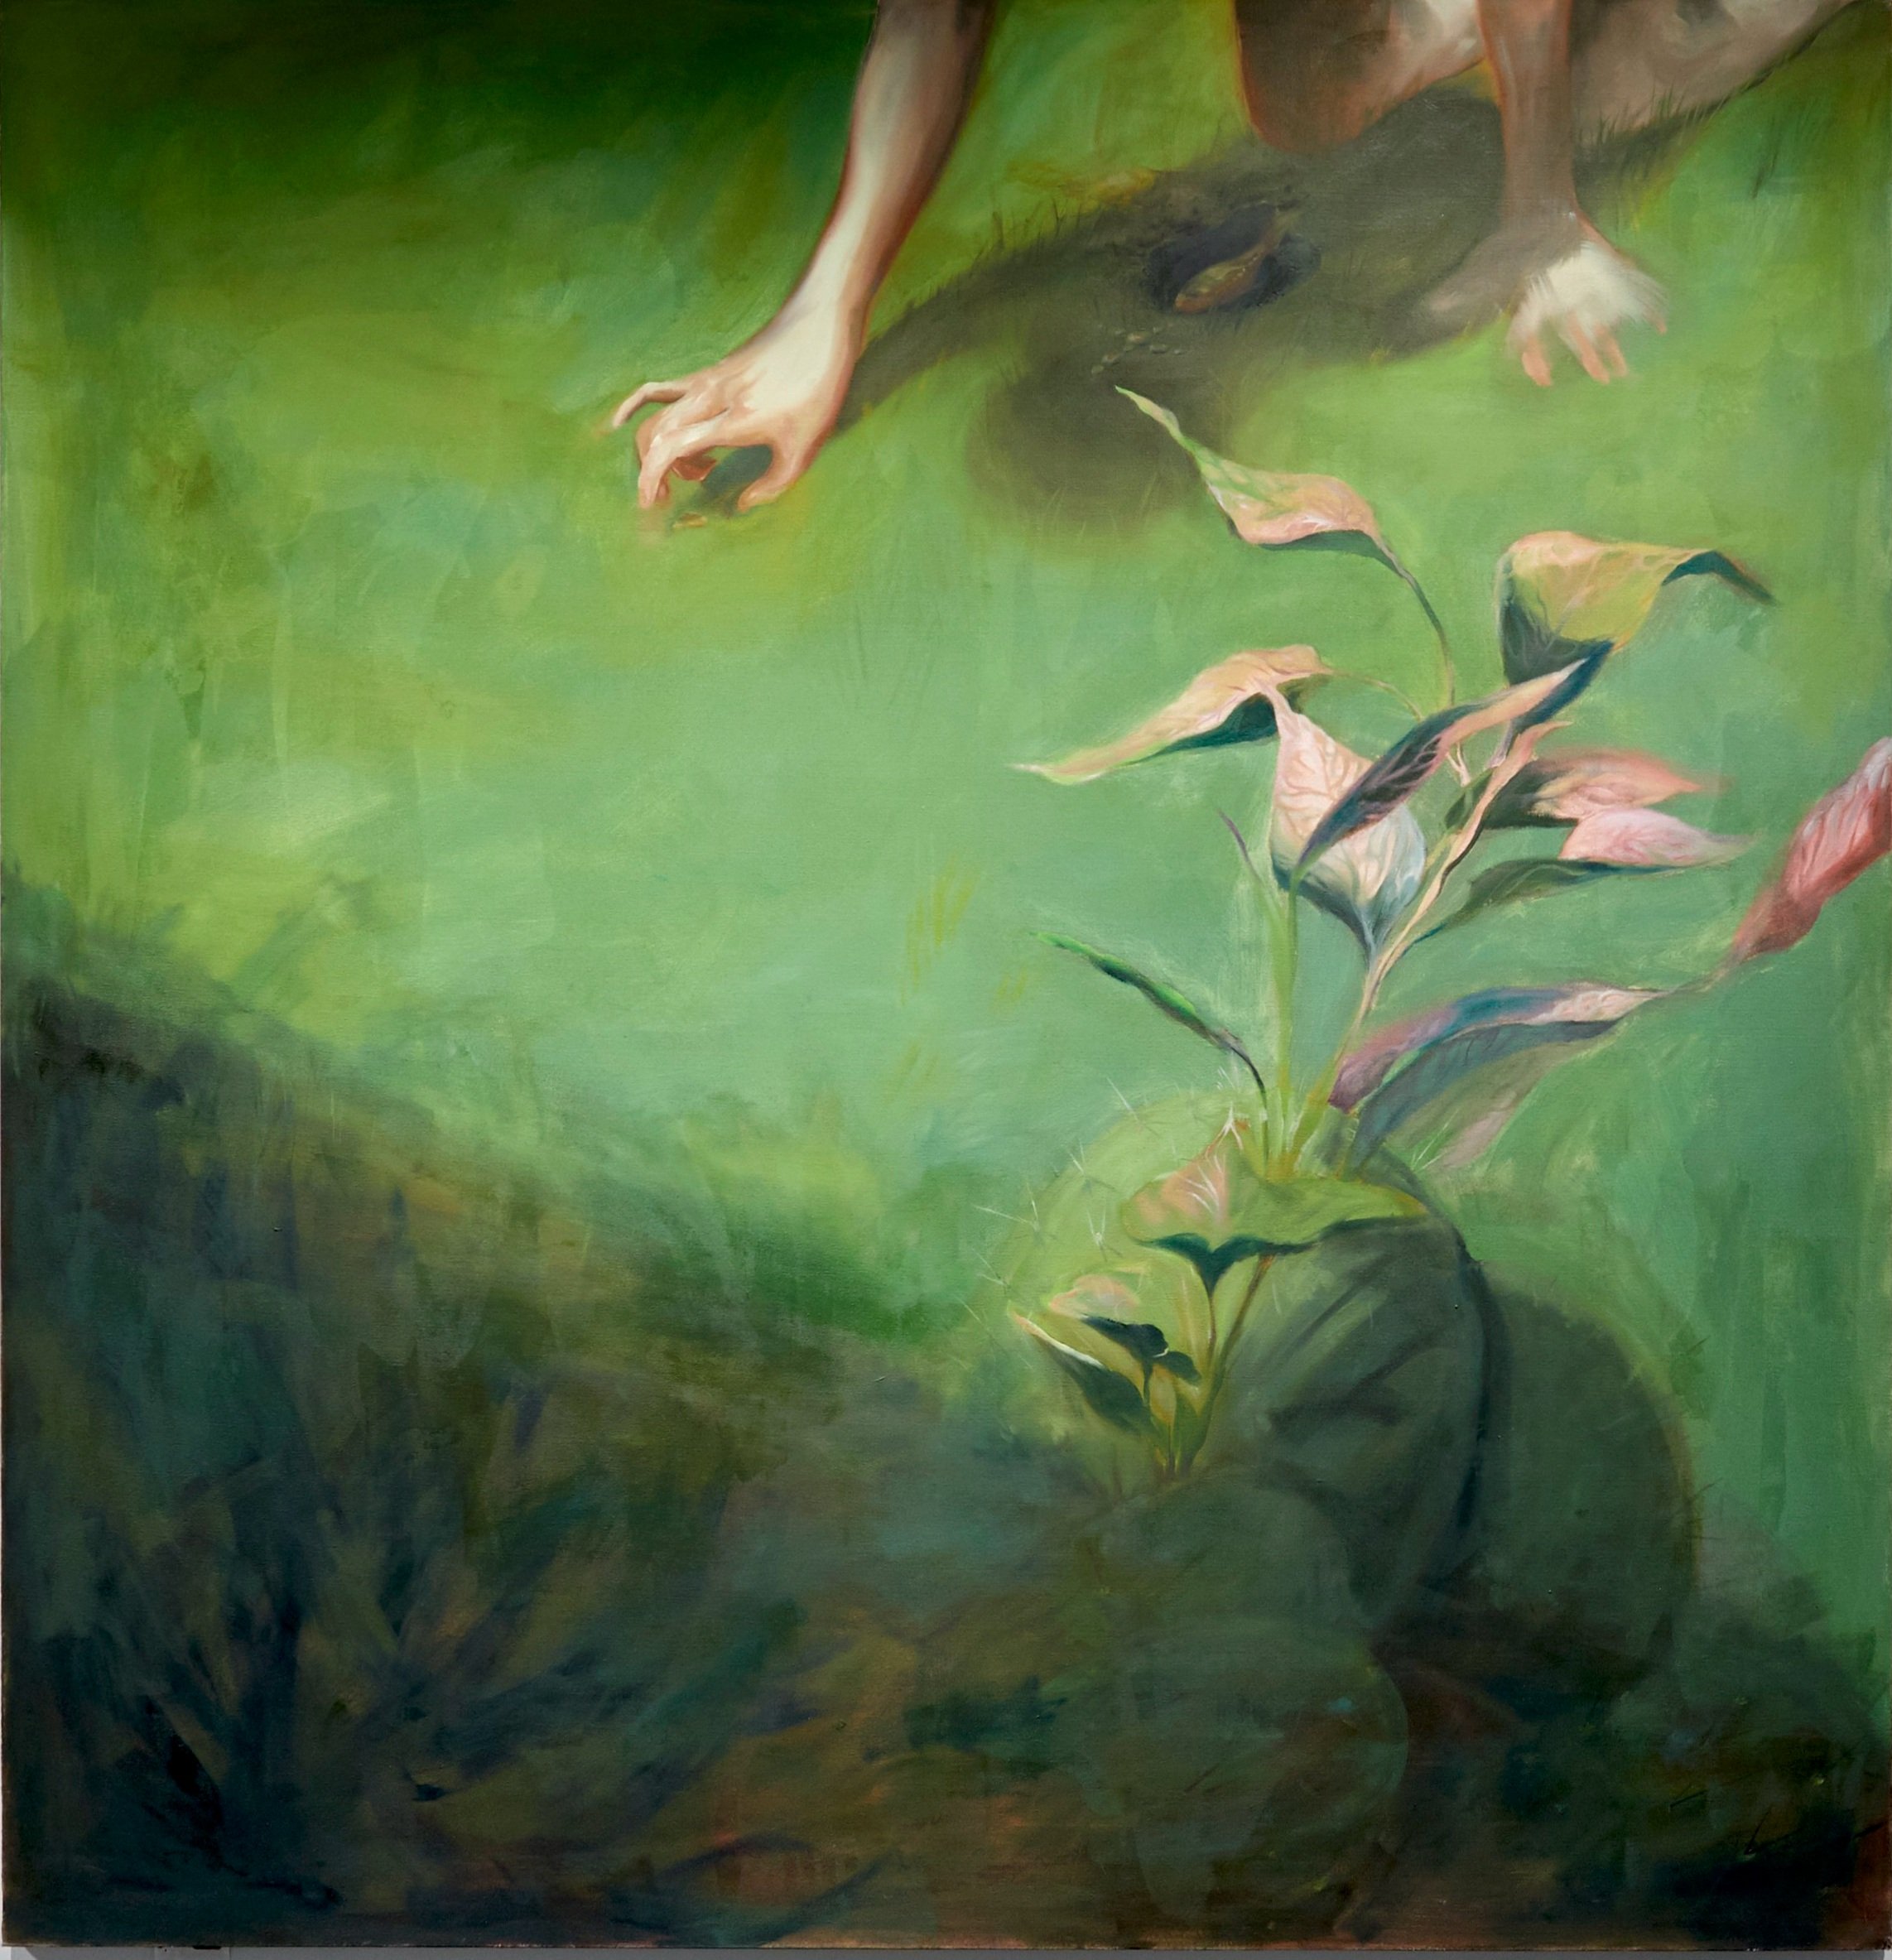   Amy Tidwell ,  Back Garden , 2021, Oil on canvas,  72 x 70 in. 